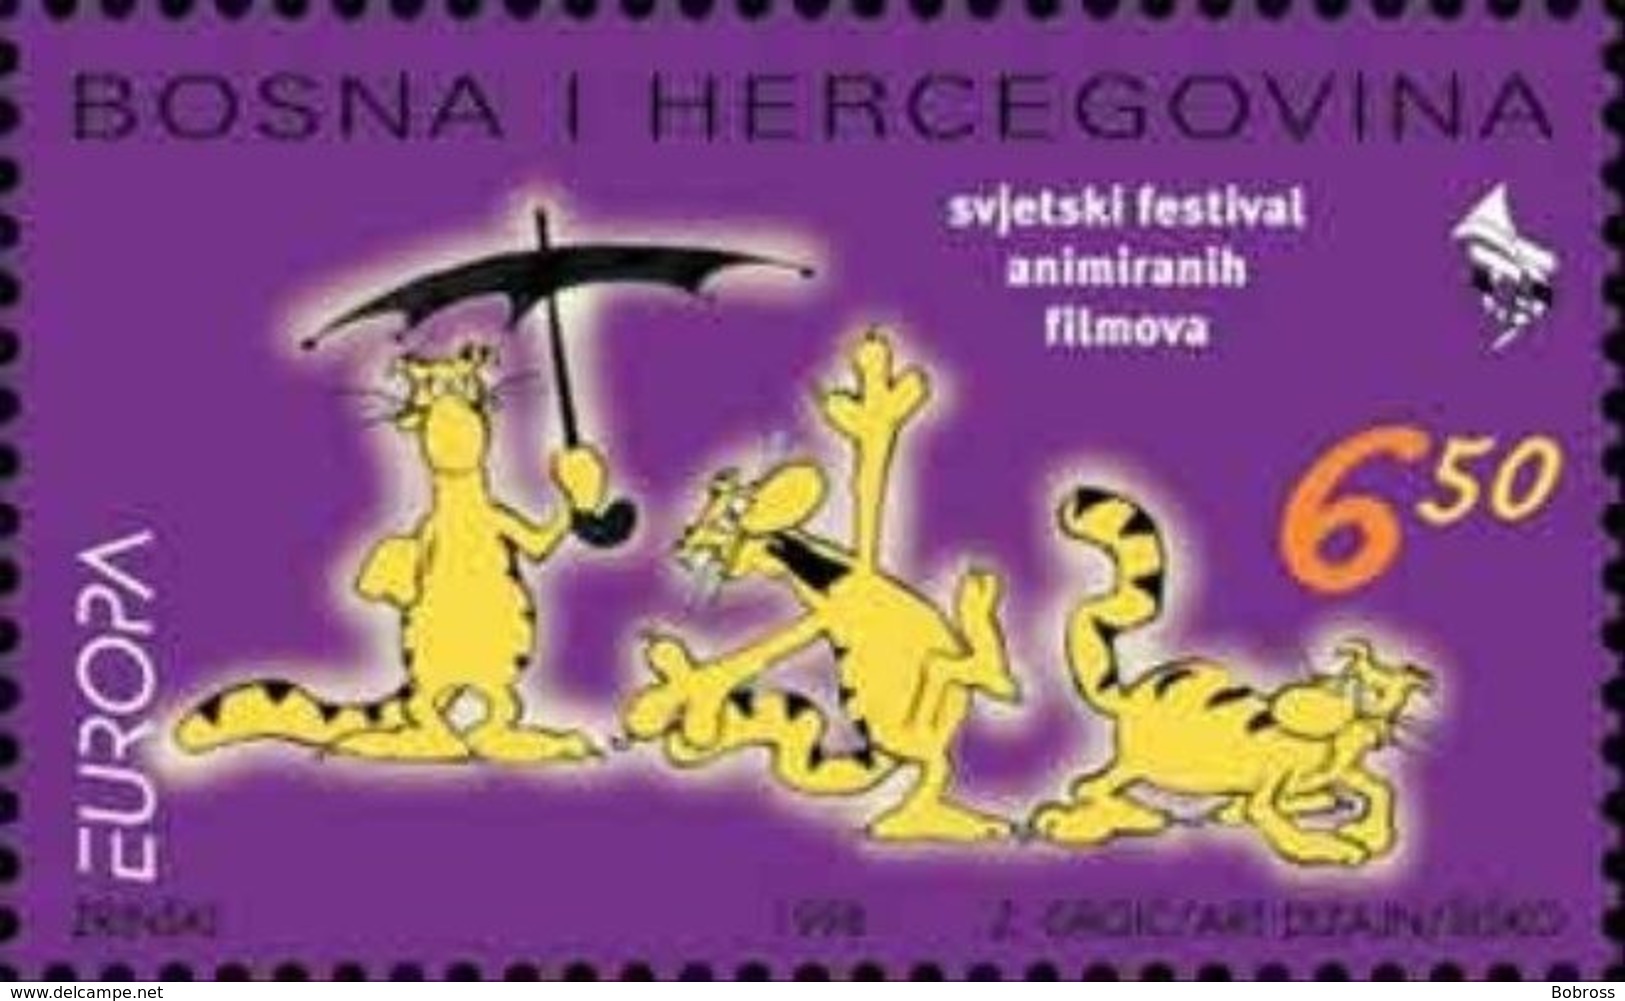 1998 EUROPA, World Festival Of Animated Films In Zagreb, N° 37, Croat Post Mostar, Bosnia And Herzegovina,MNH - Bosnia Herzegovina